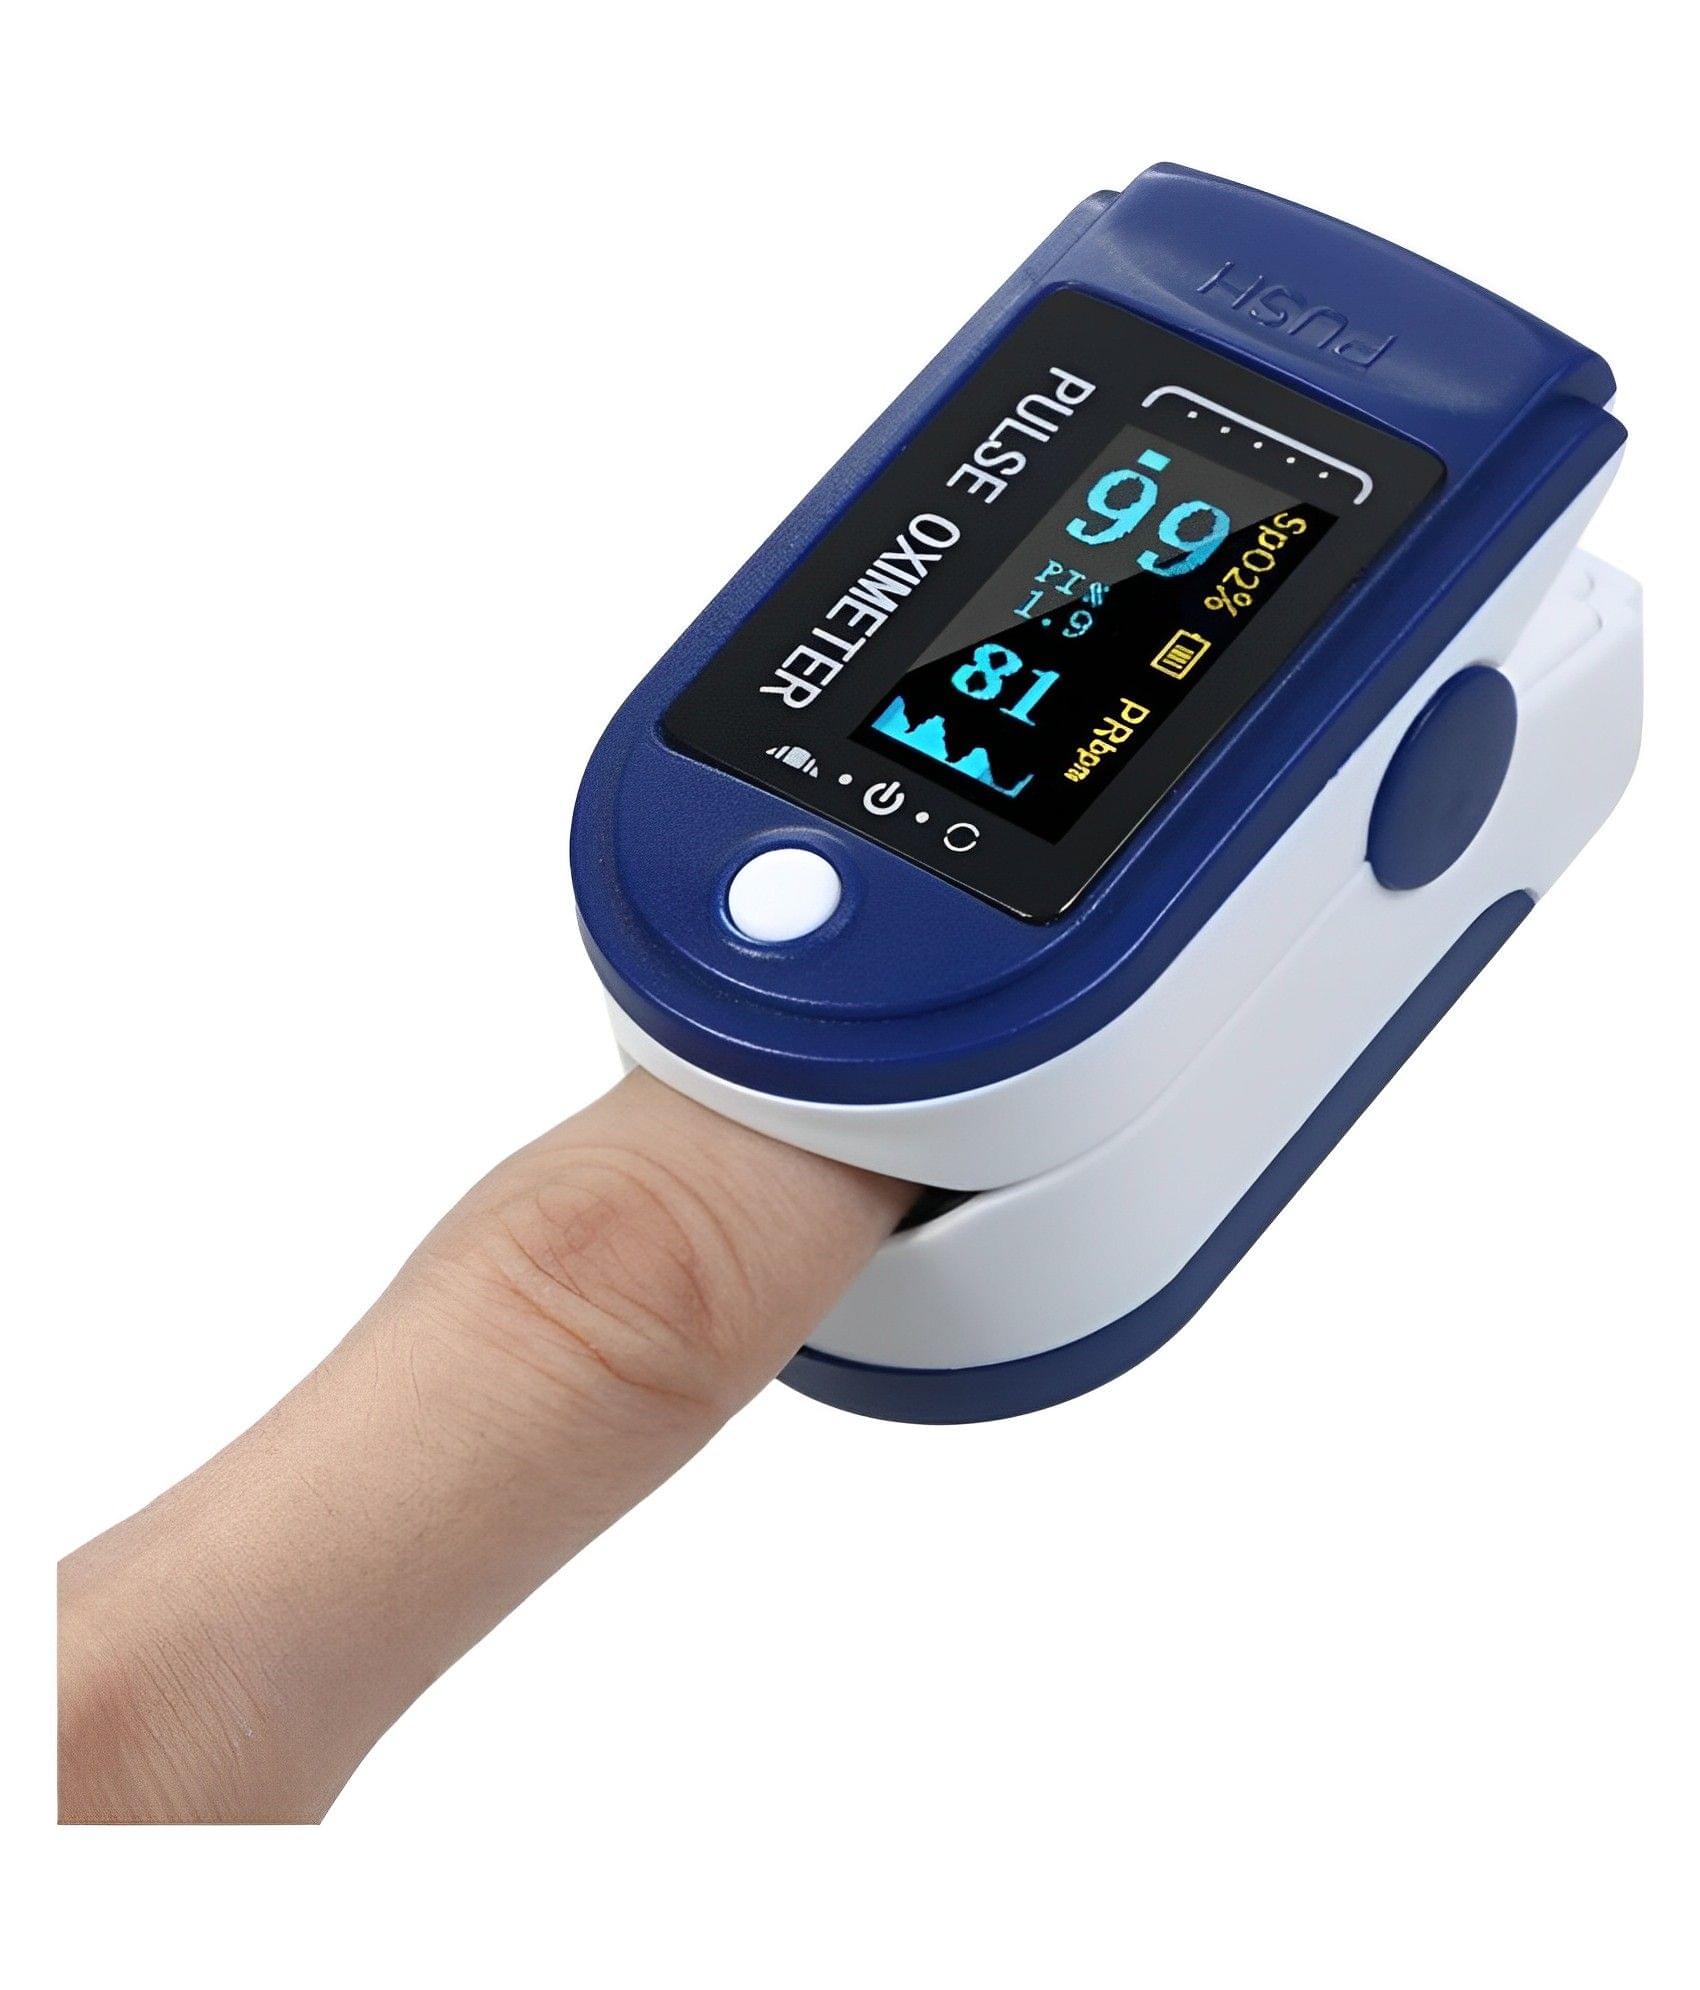 Buy Clonmed Fingertip Pulse Oximeter online The PassBox®